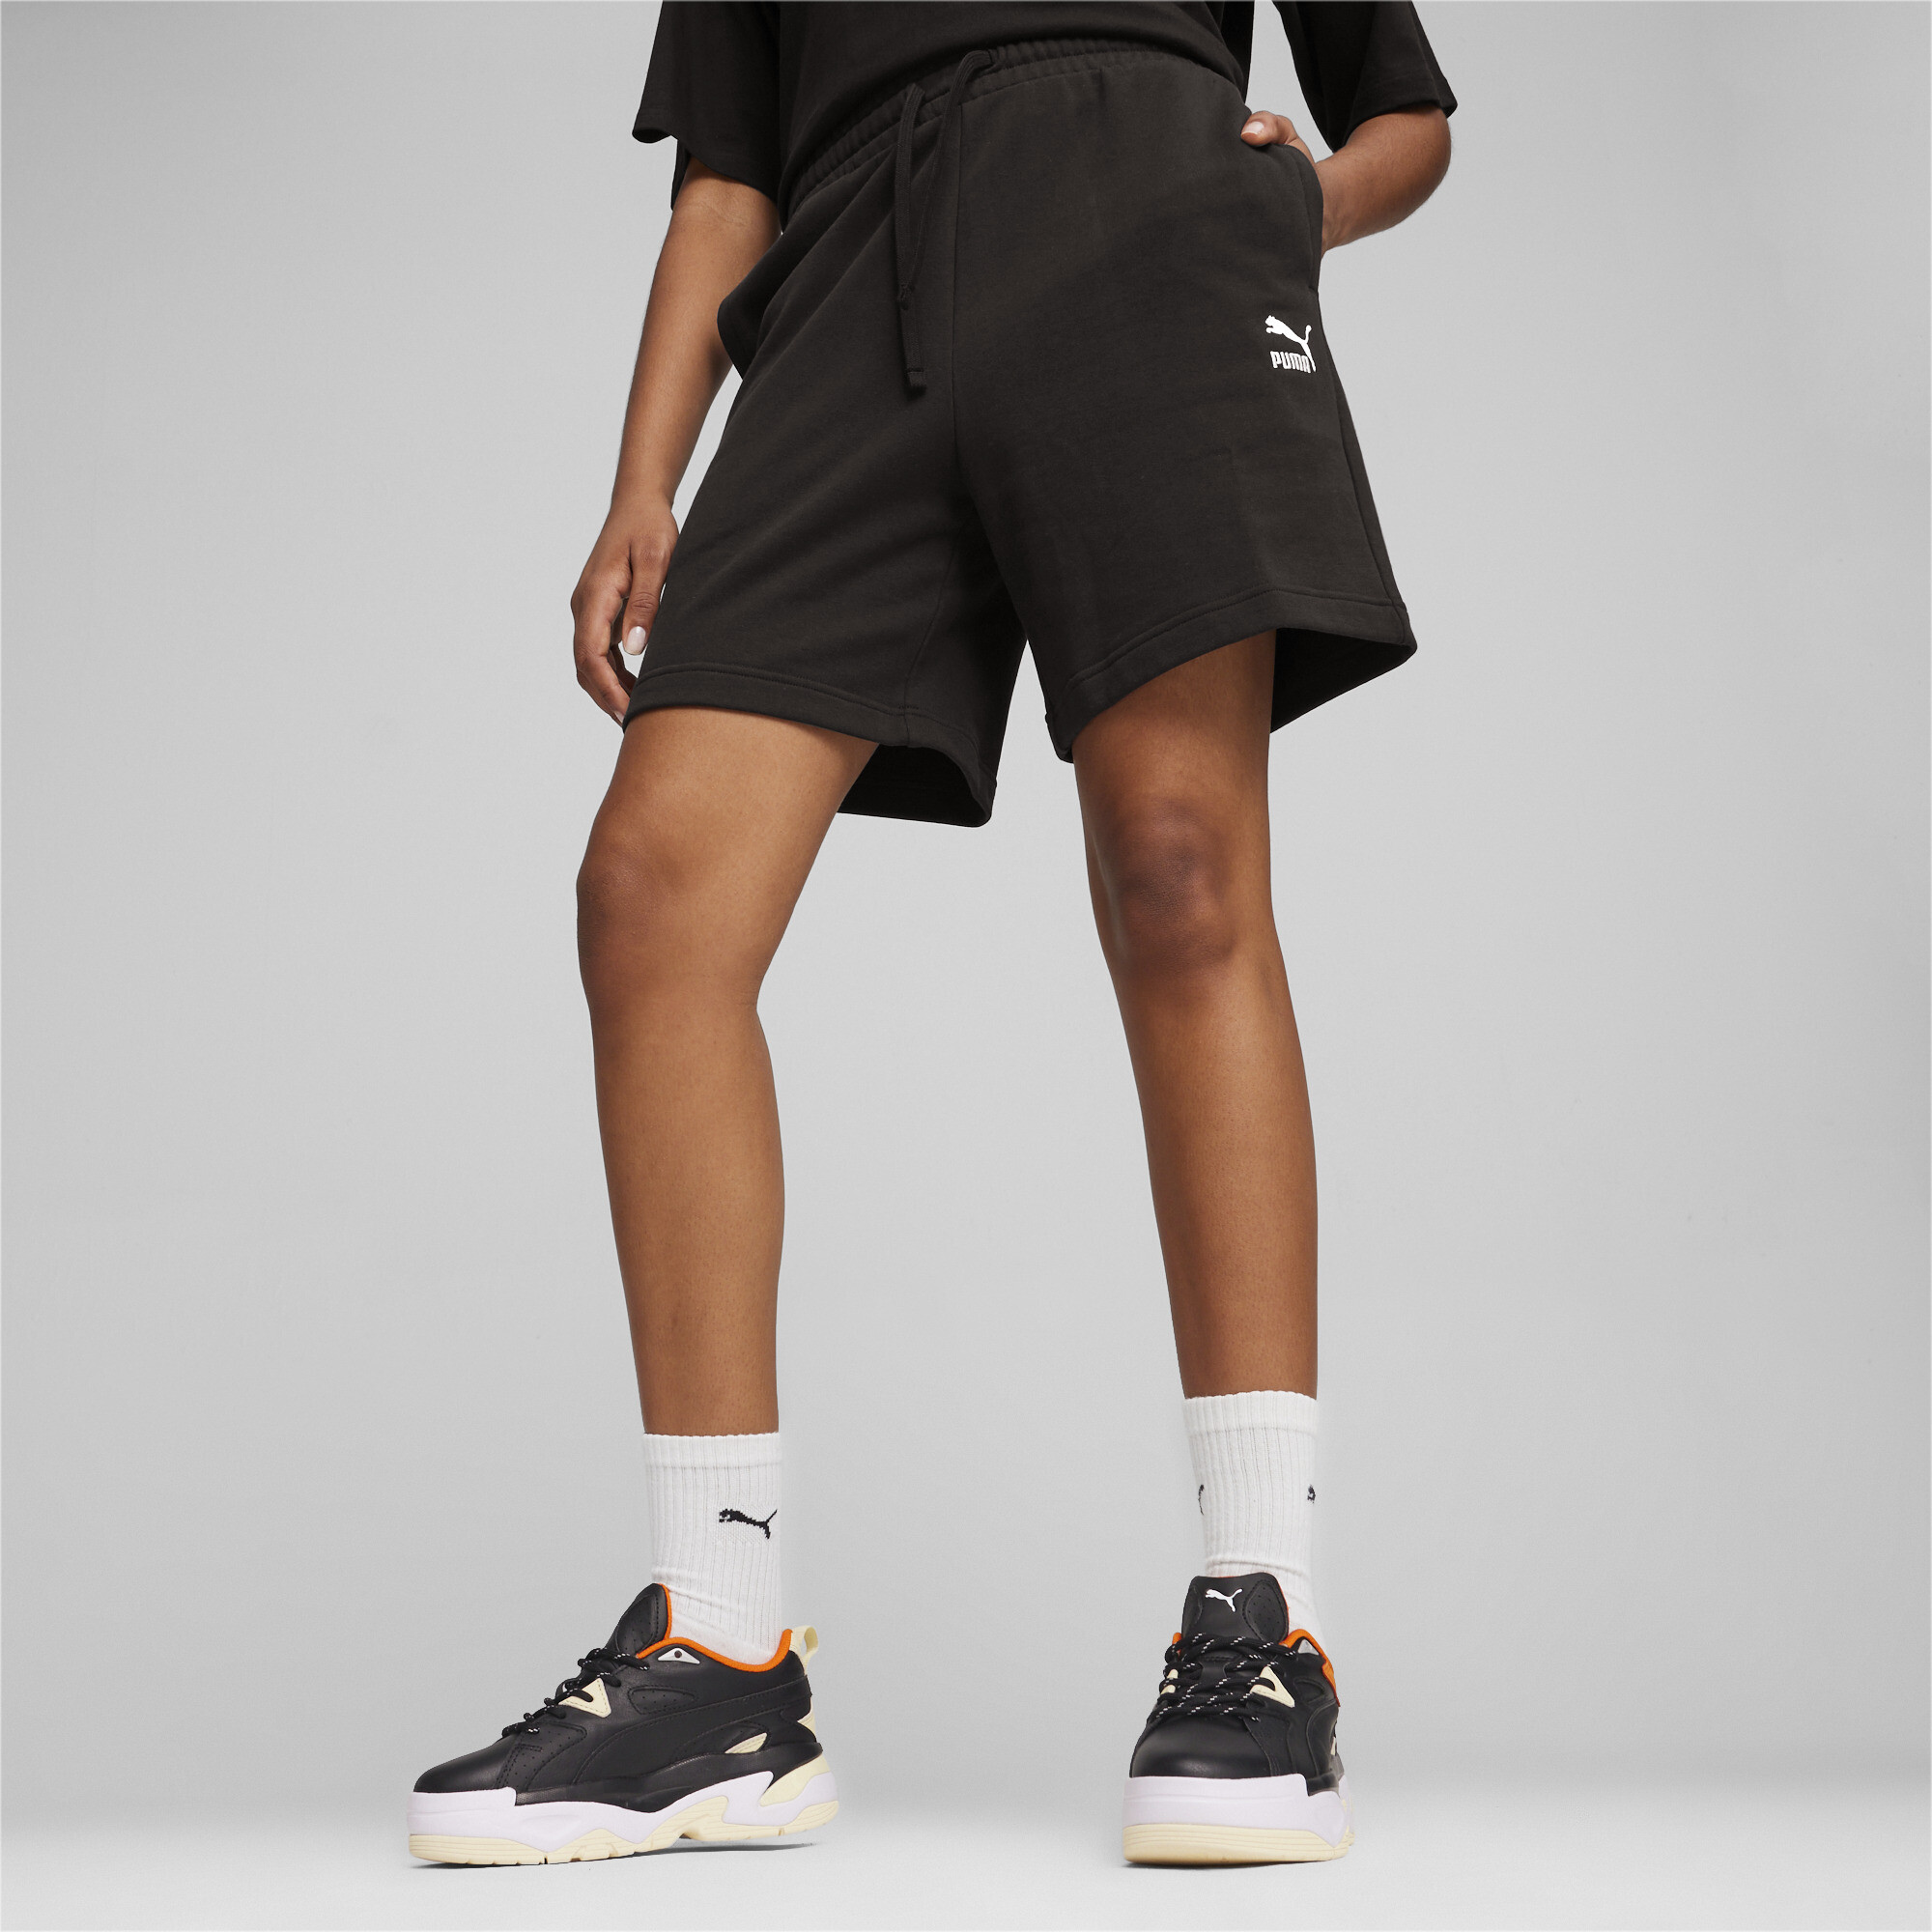 Puma BETTER CLASSICS Shorts, Black, Size XL, Clothing